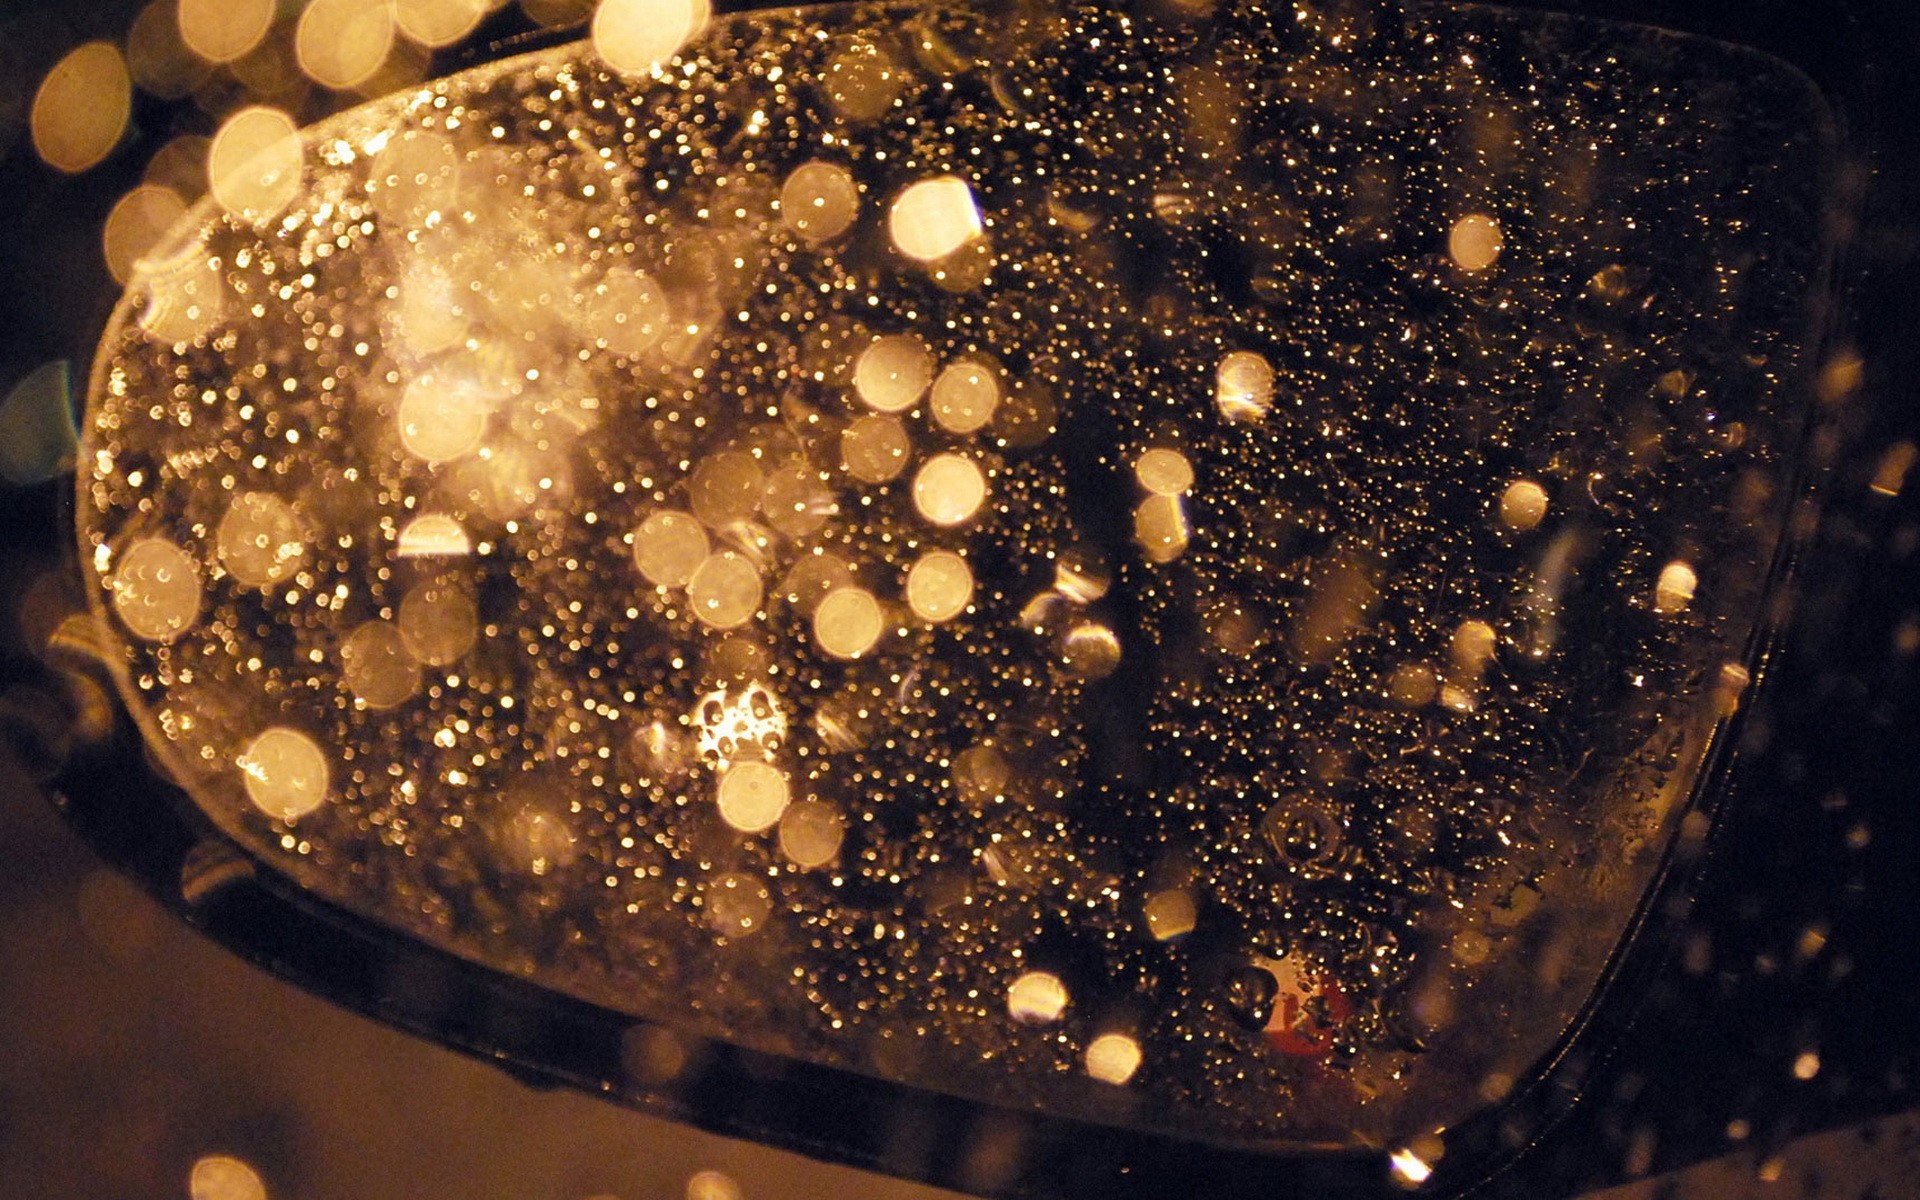 Rain Mirror Wallpaper Water Drops On